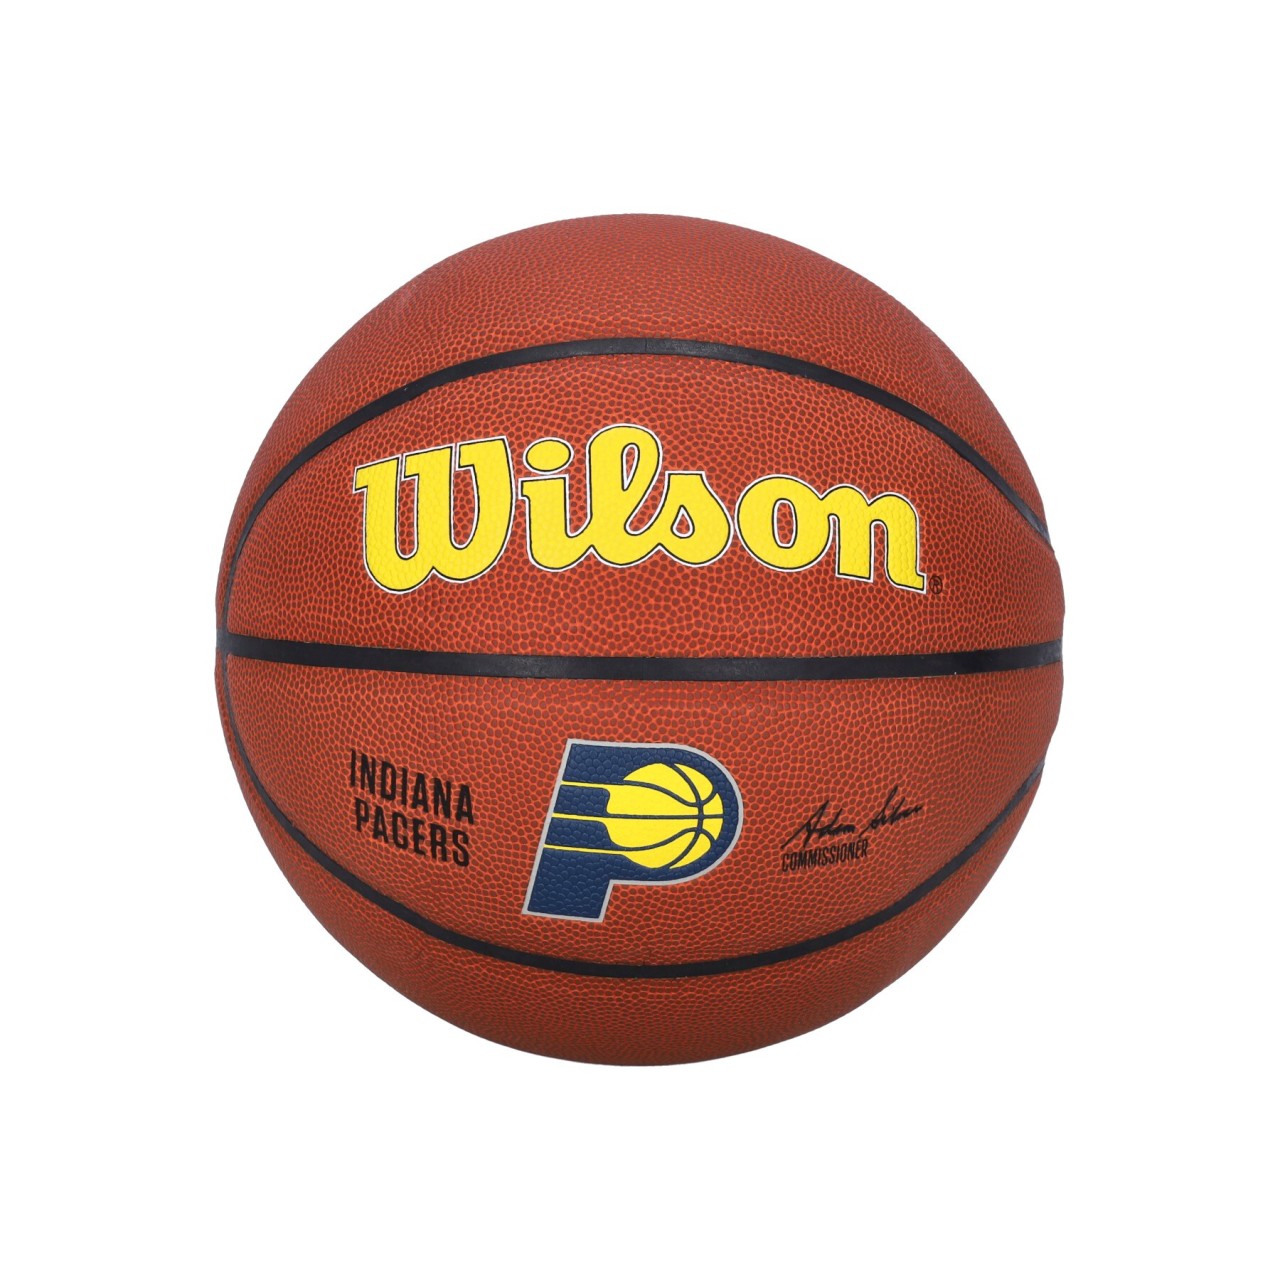 WILSON TEAM NBA TEAM ALLIANCE BASKETBALL SIZE 7 INDPAC WTB3100XBIND